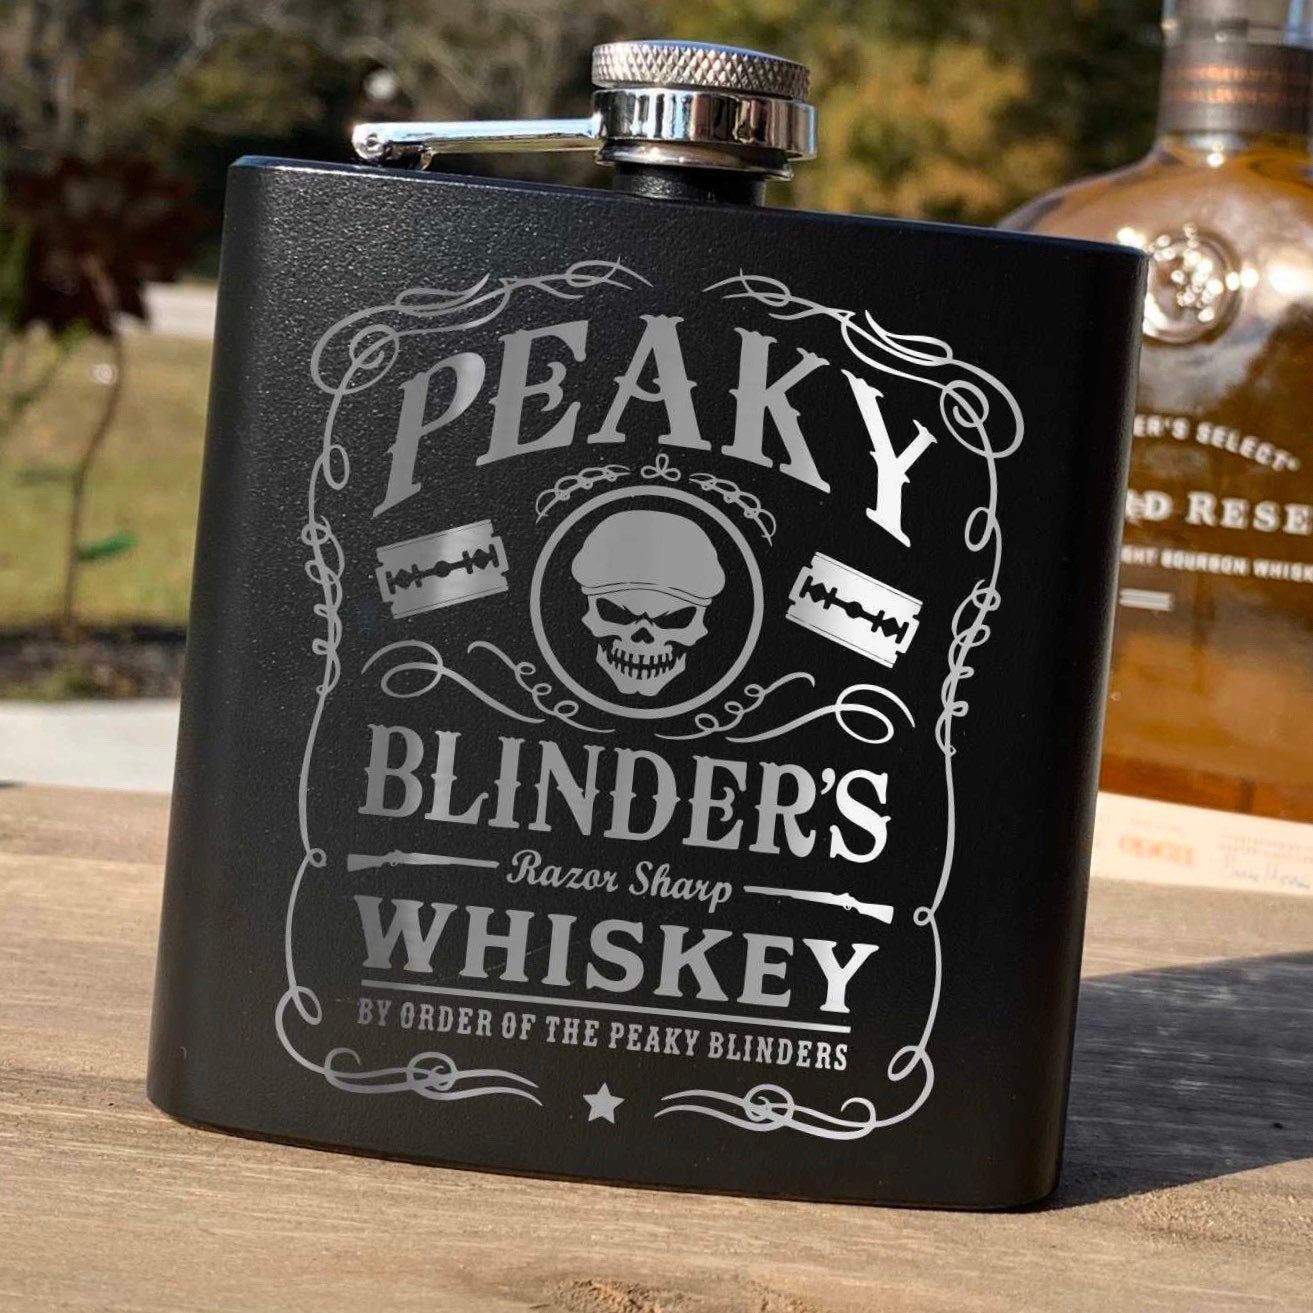 11 Peaky Blinders Merch and Gifts - Peaky Blinders Whiskey, Hats